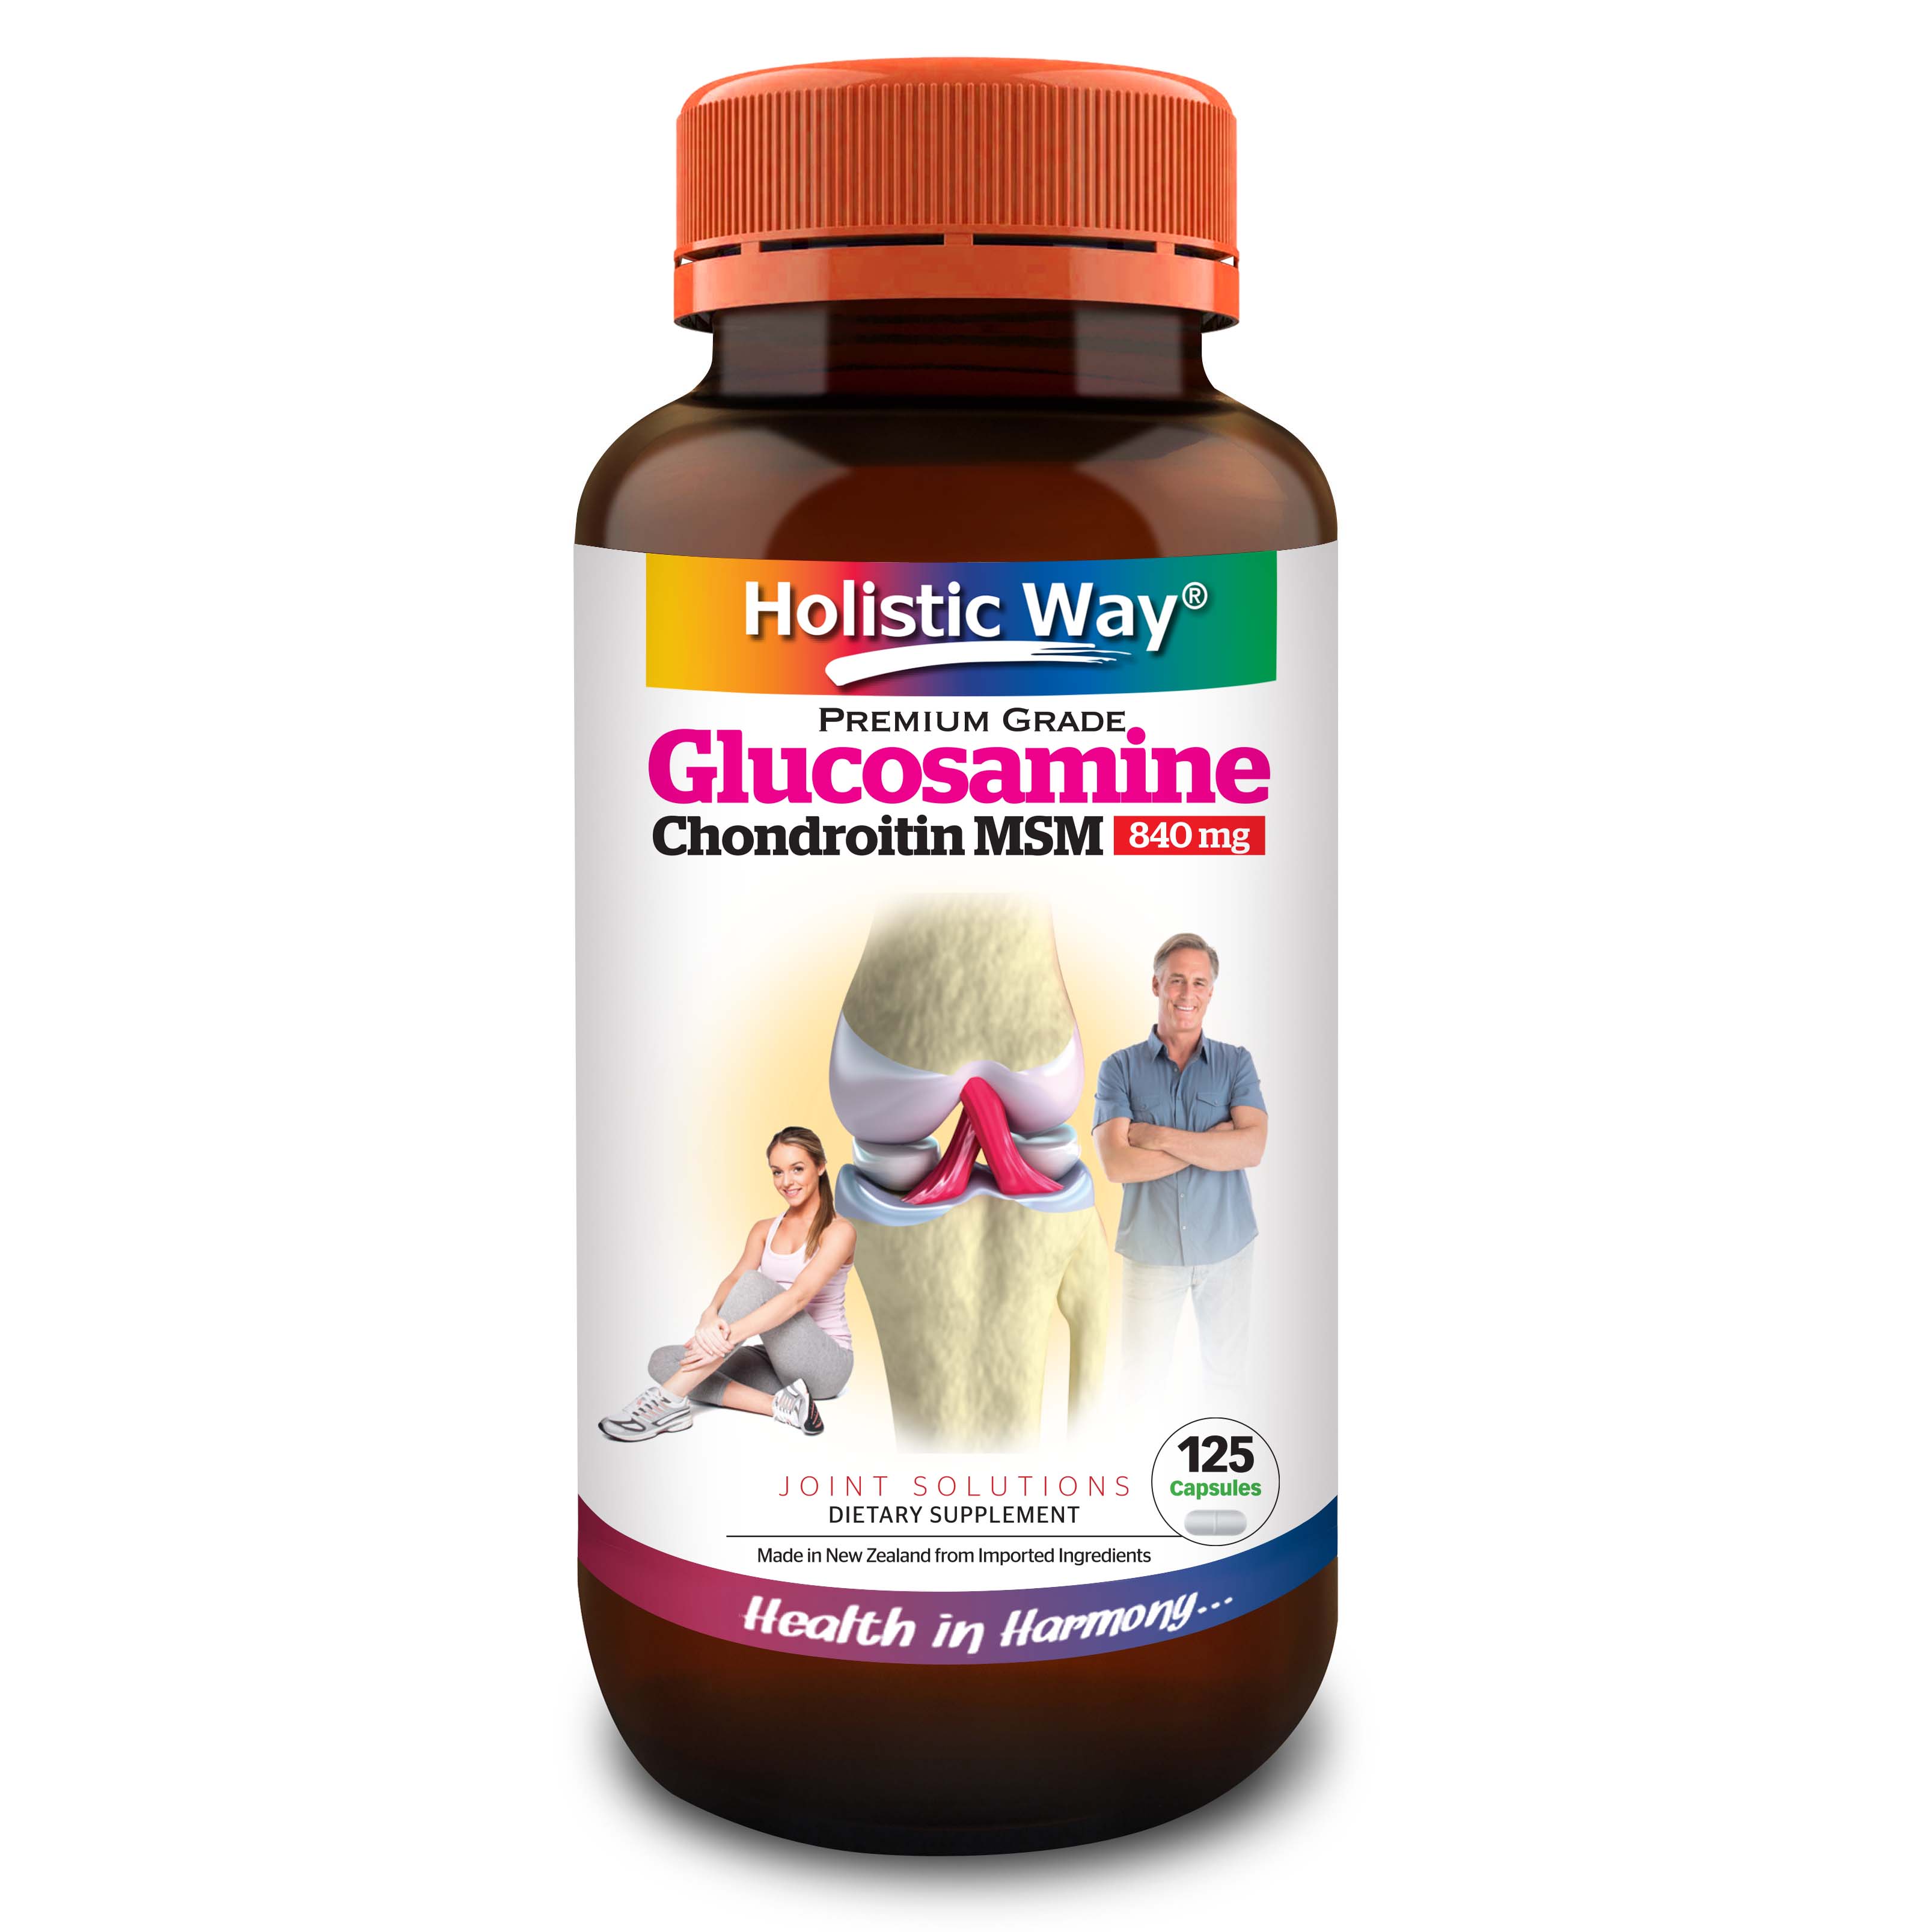 Holistic Way Premium Grade Glucosamine Chondroitin MSM 840mg (125 Caps)